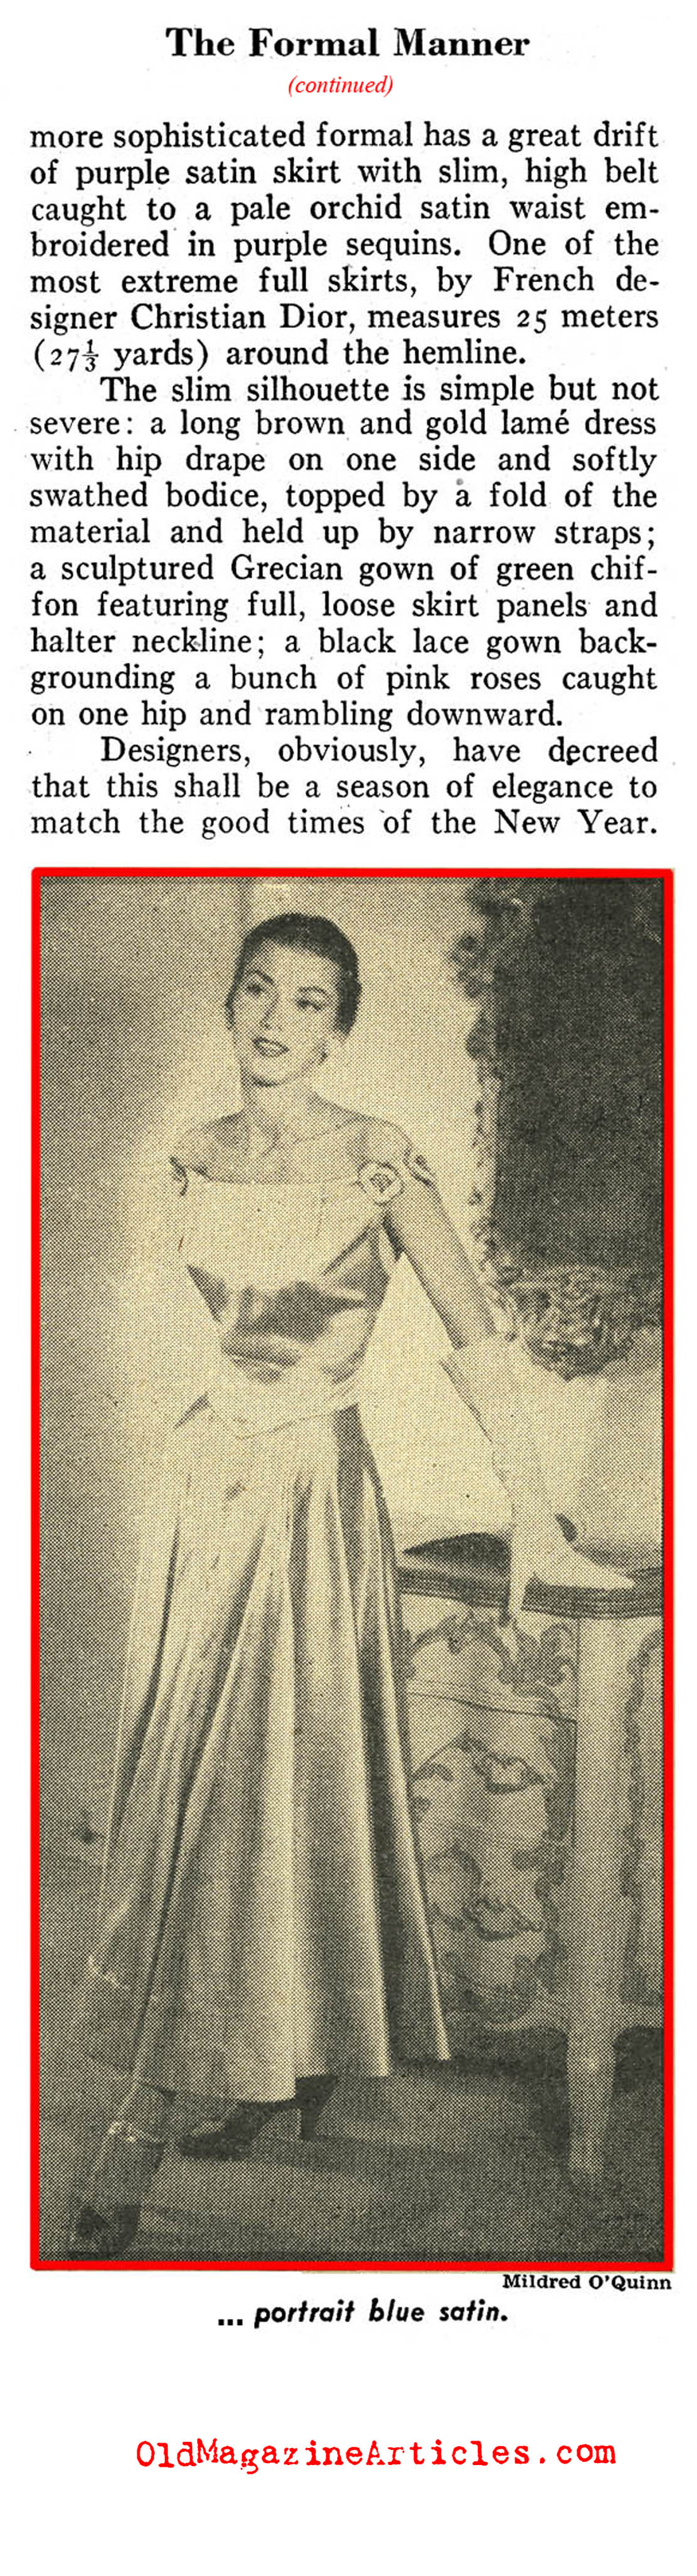 Gowns (The Pathfinder Magazine, 1947)